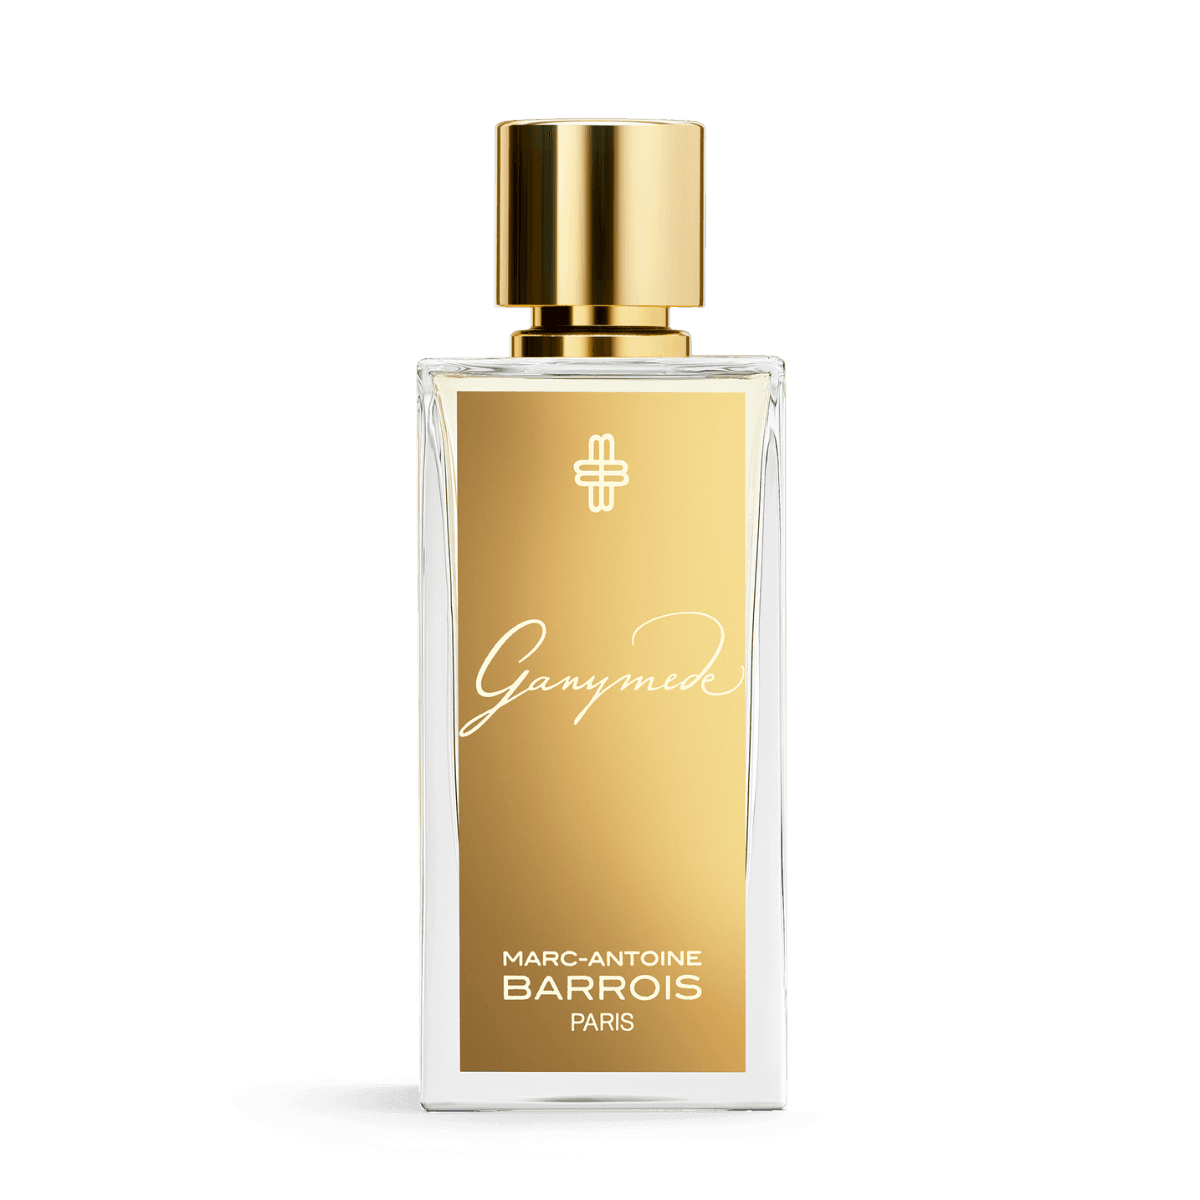 Afbeelding van Ganymede eau de parfum 100 ml van het merk Marc-Antoine Barrois